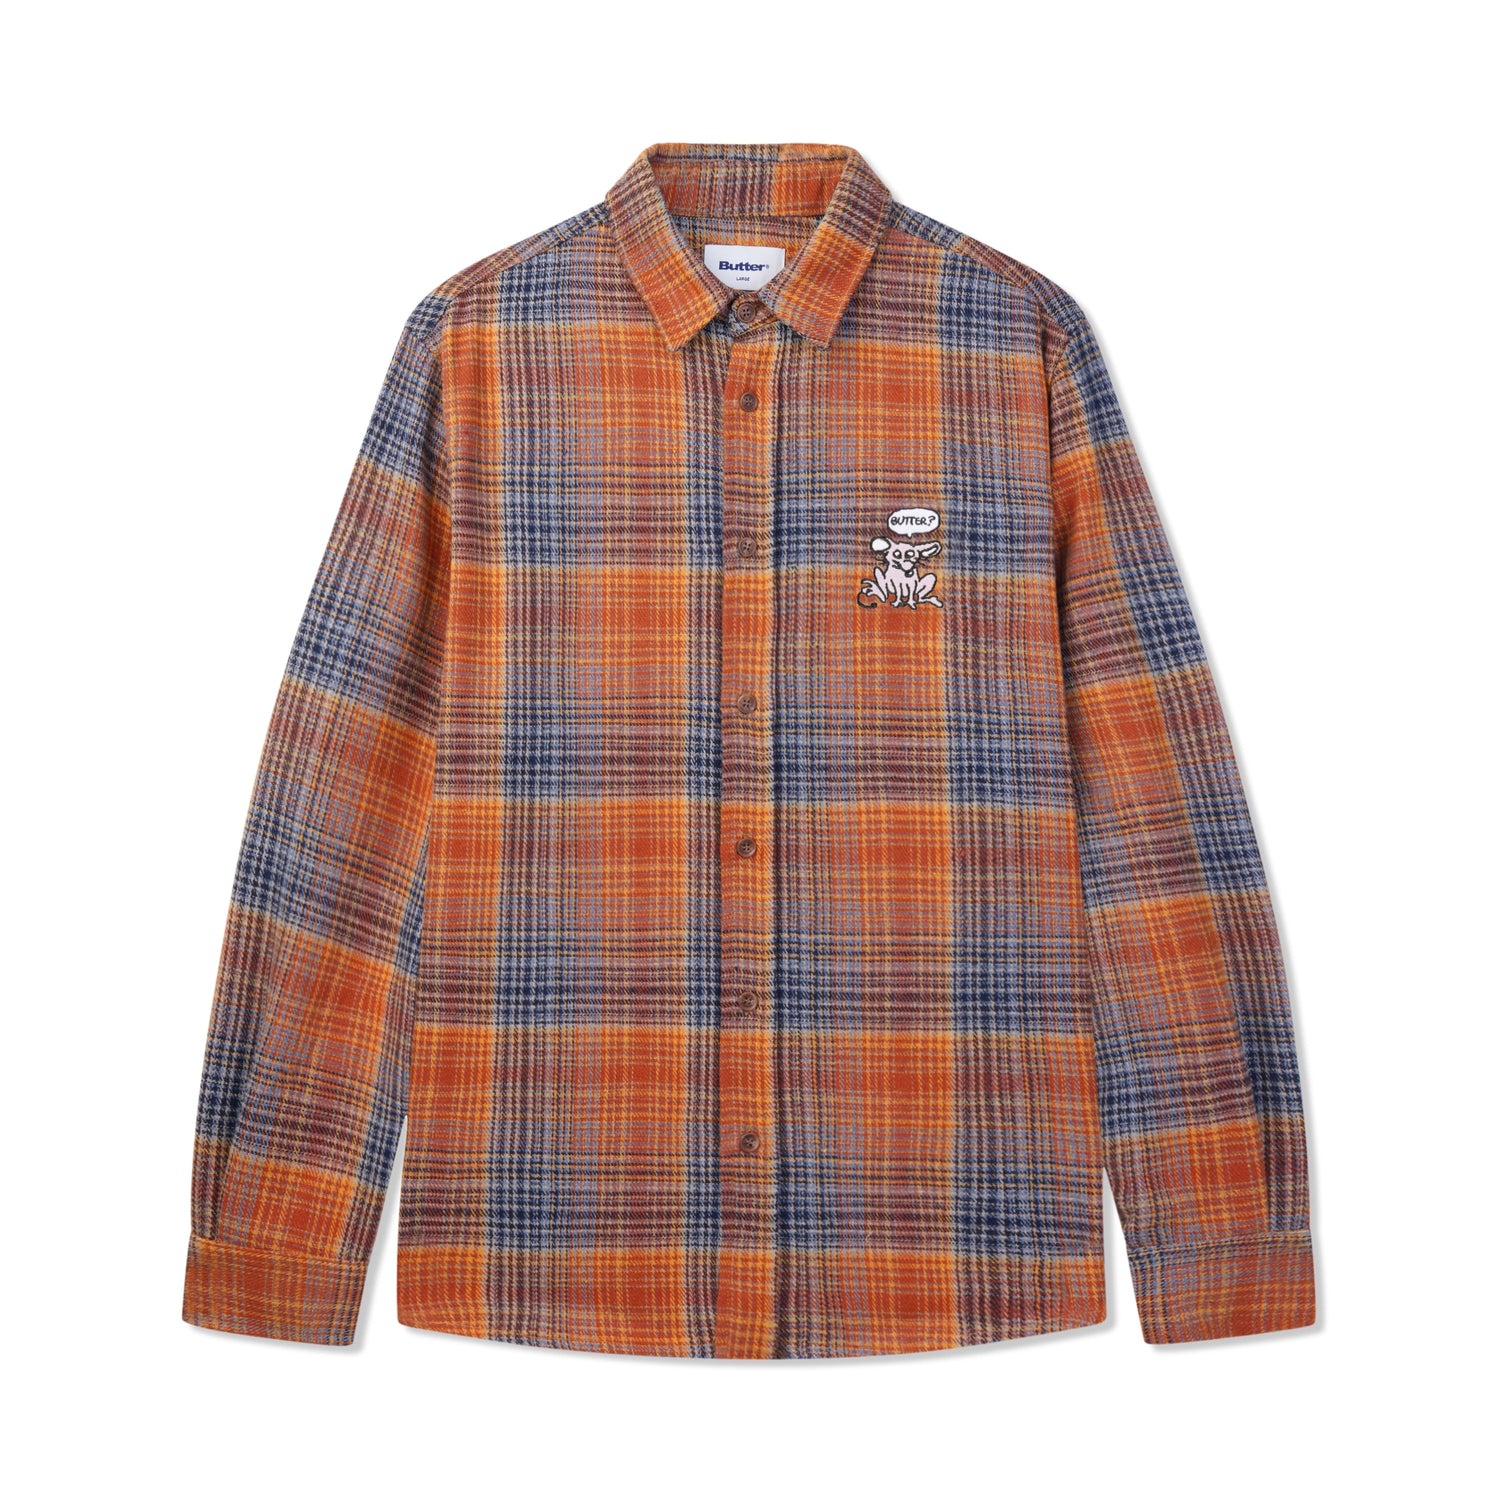 Rodent Flannel Shirt, Rust / Navy